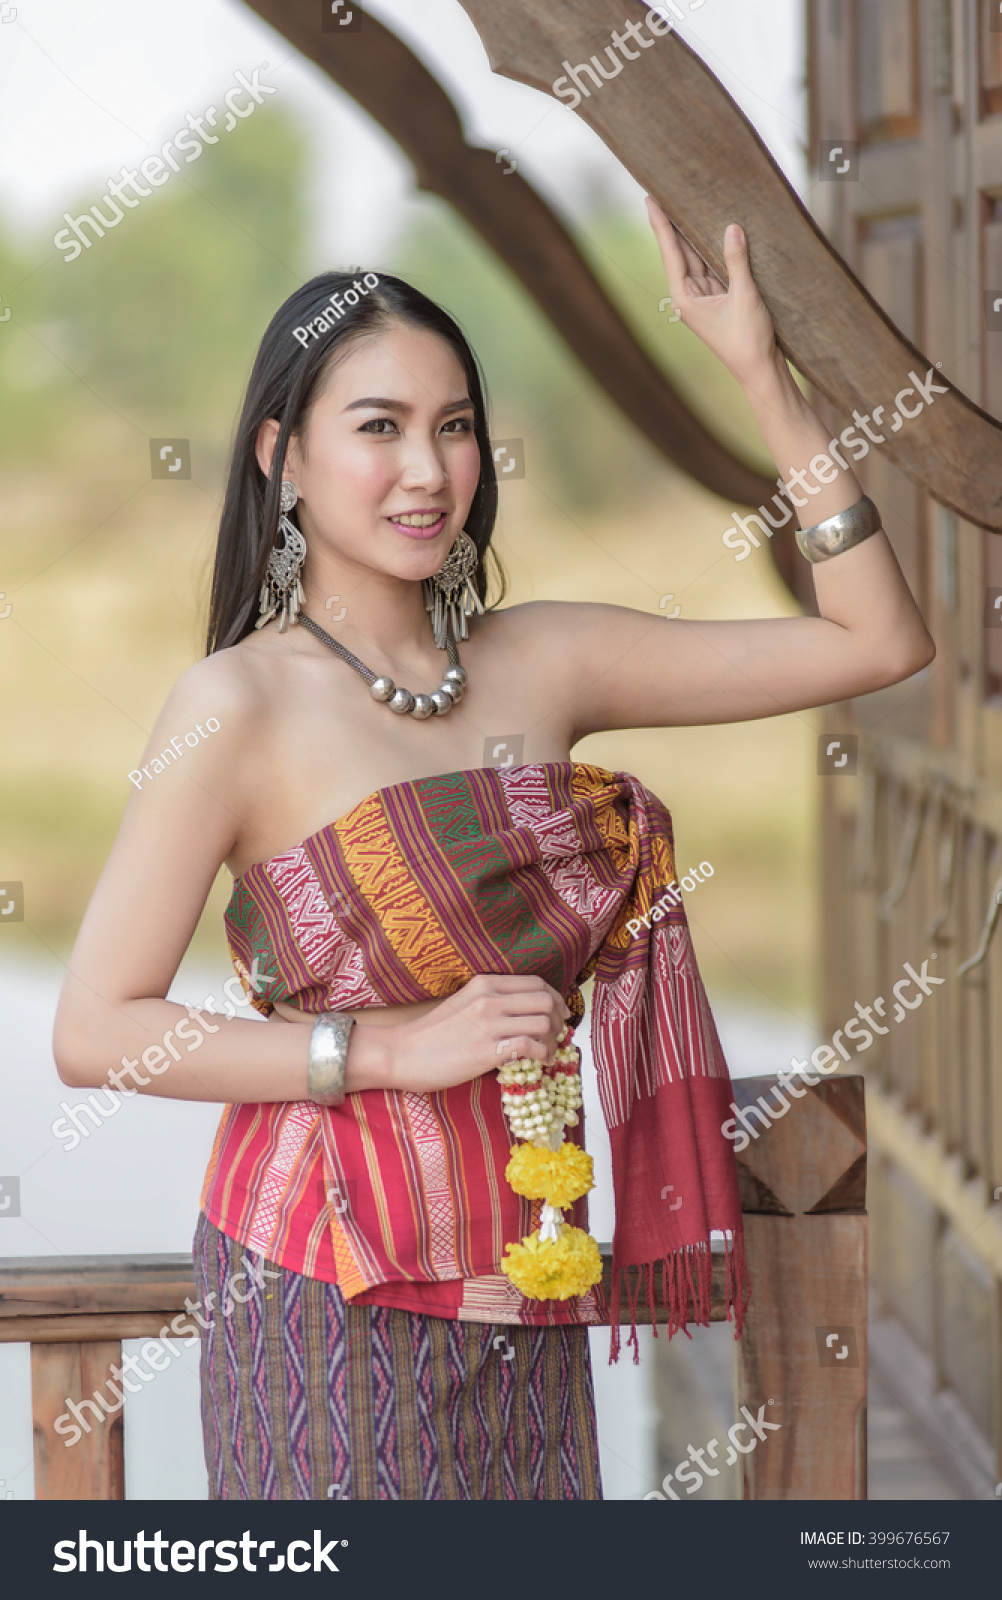 boris schmidt recommends Thai Girl Photos